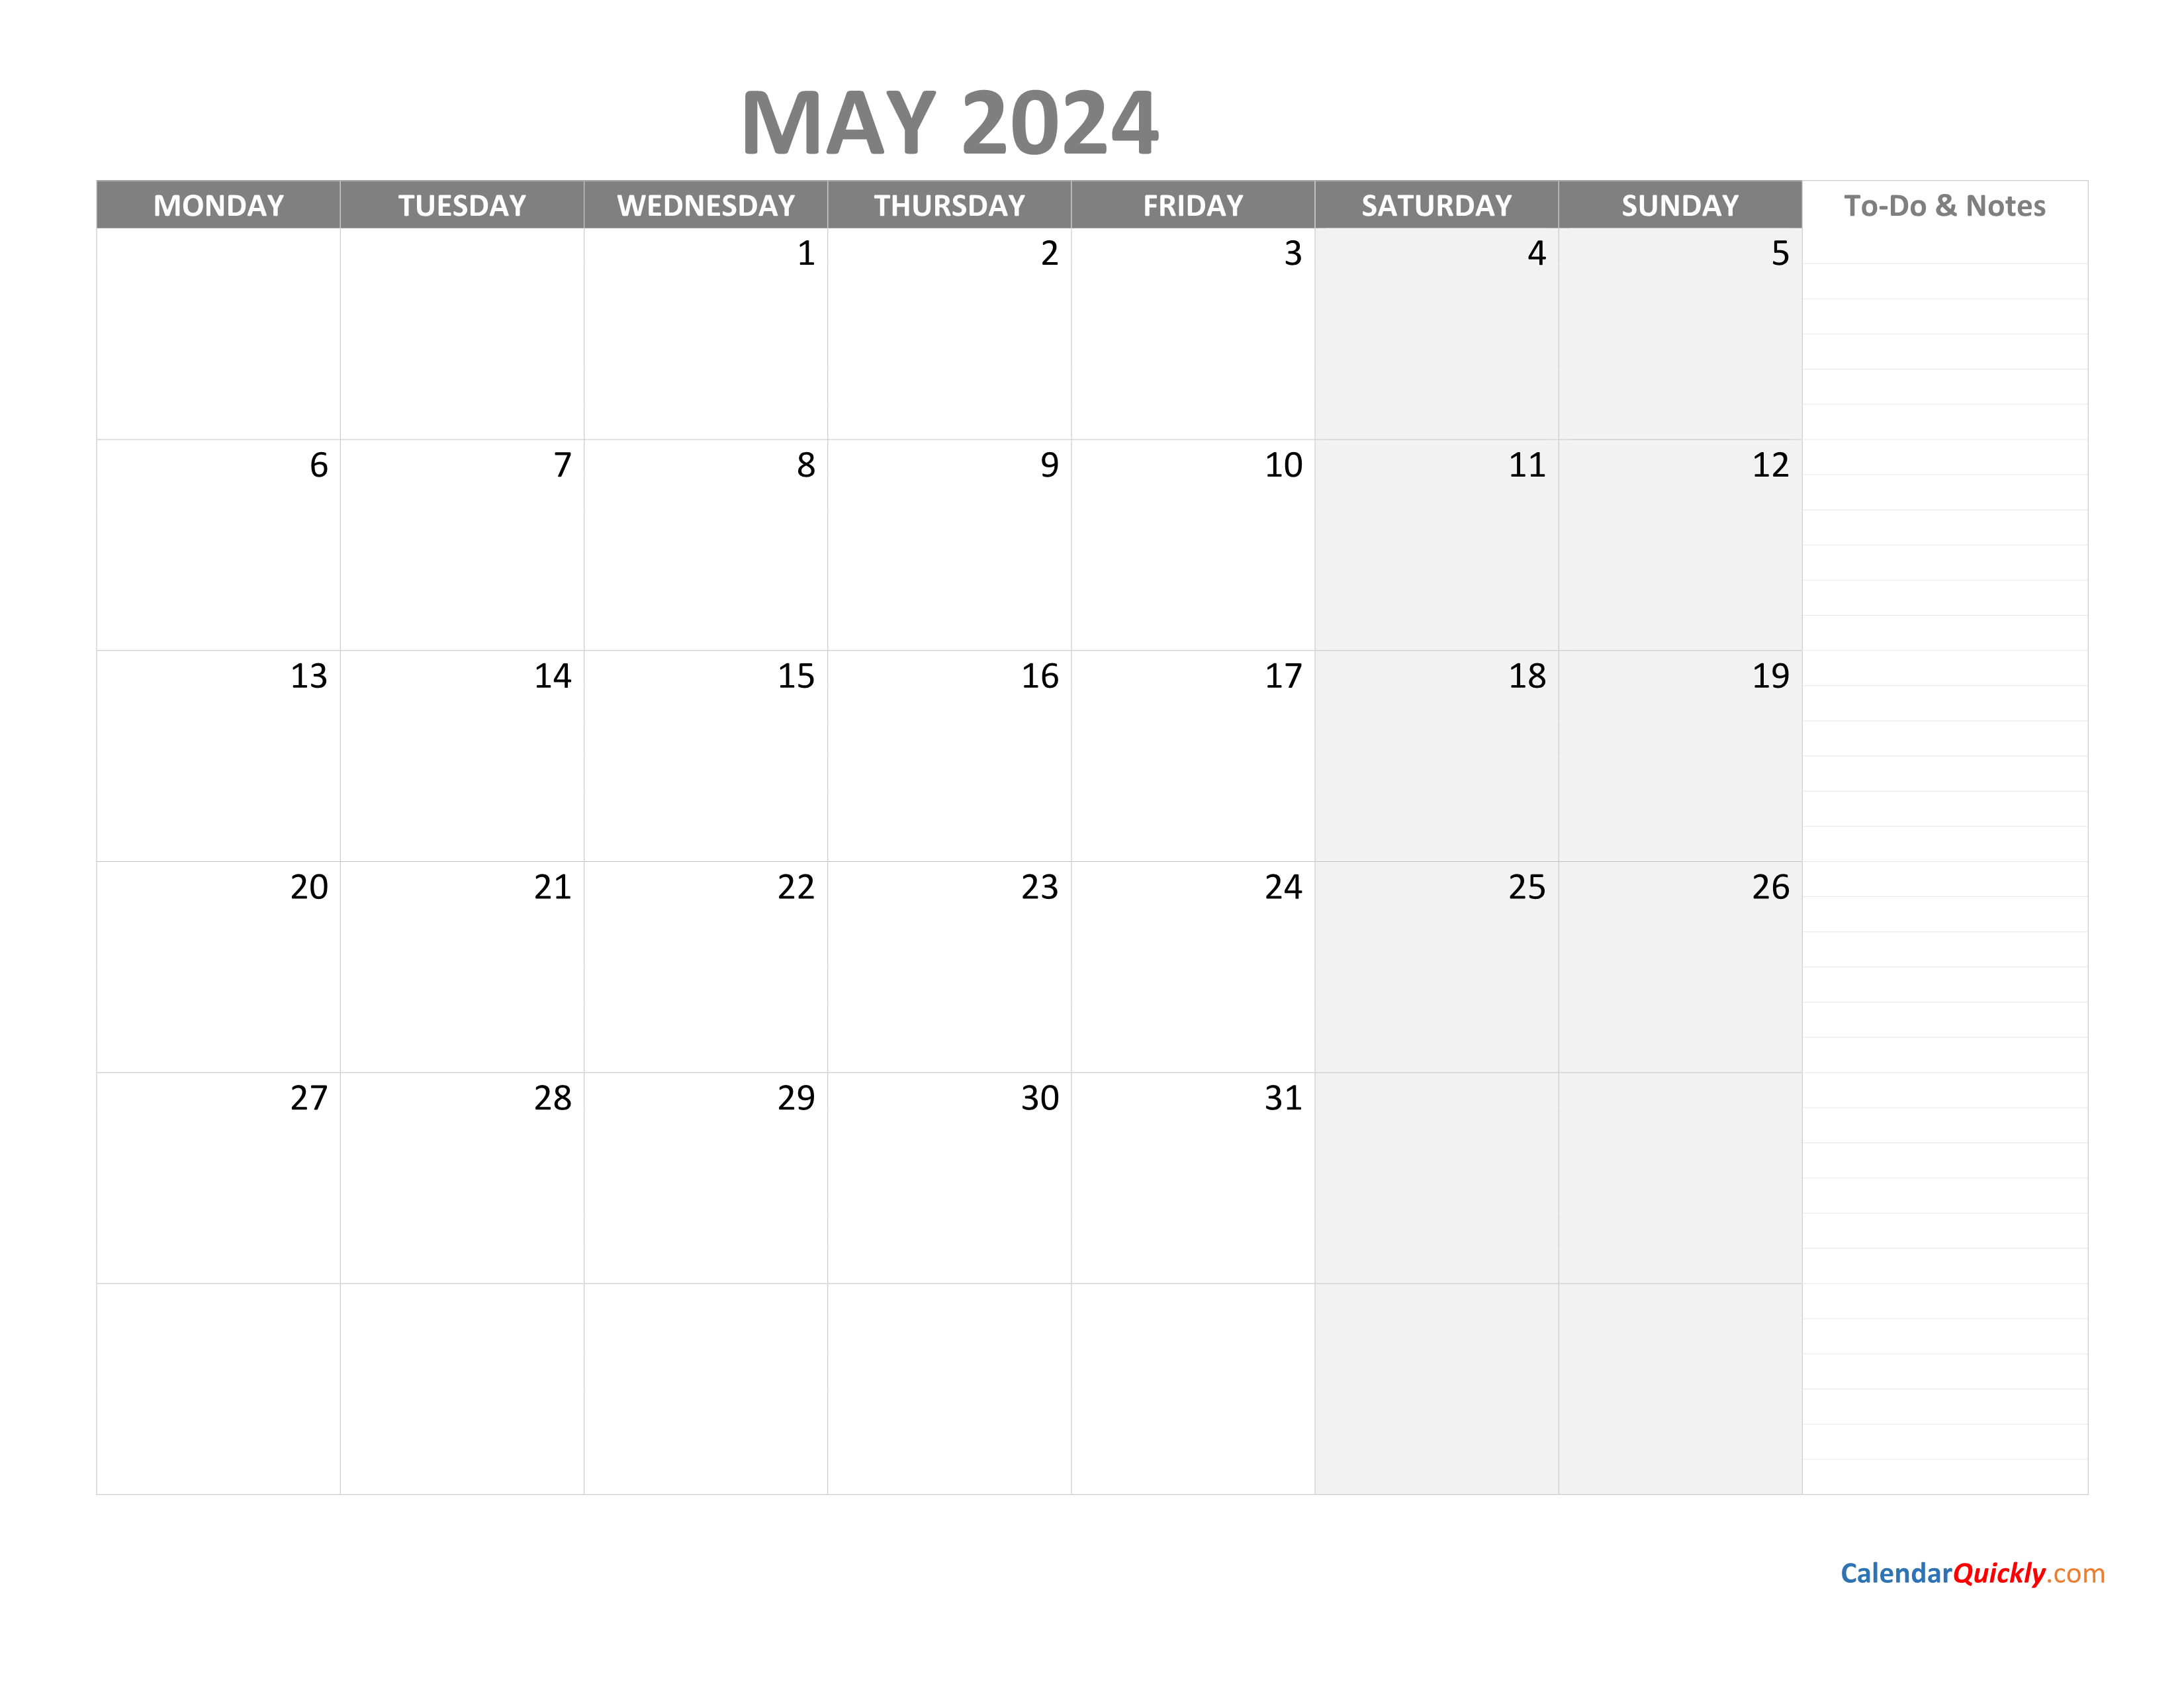 May Monday Calendar 2024 with Notes | Calendar Quickly